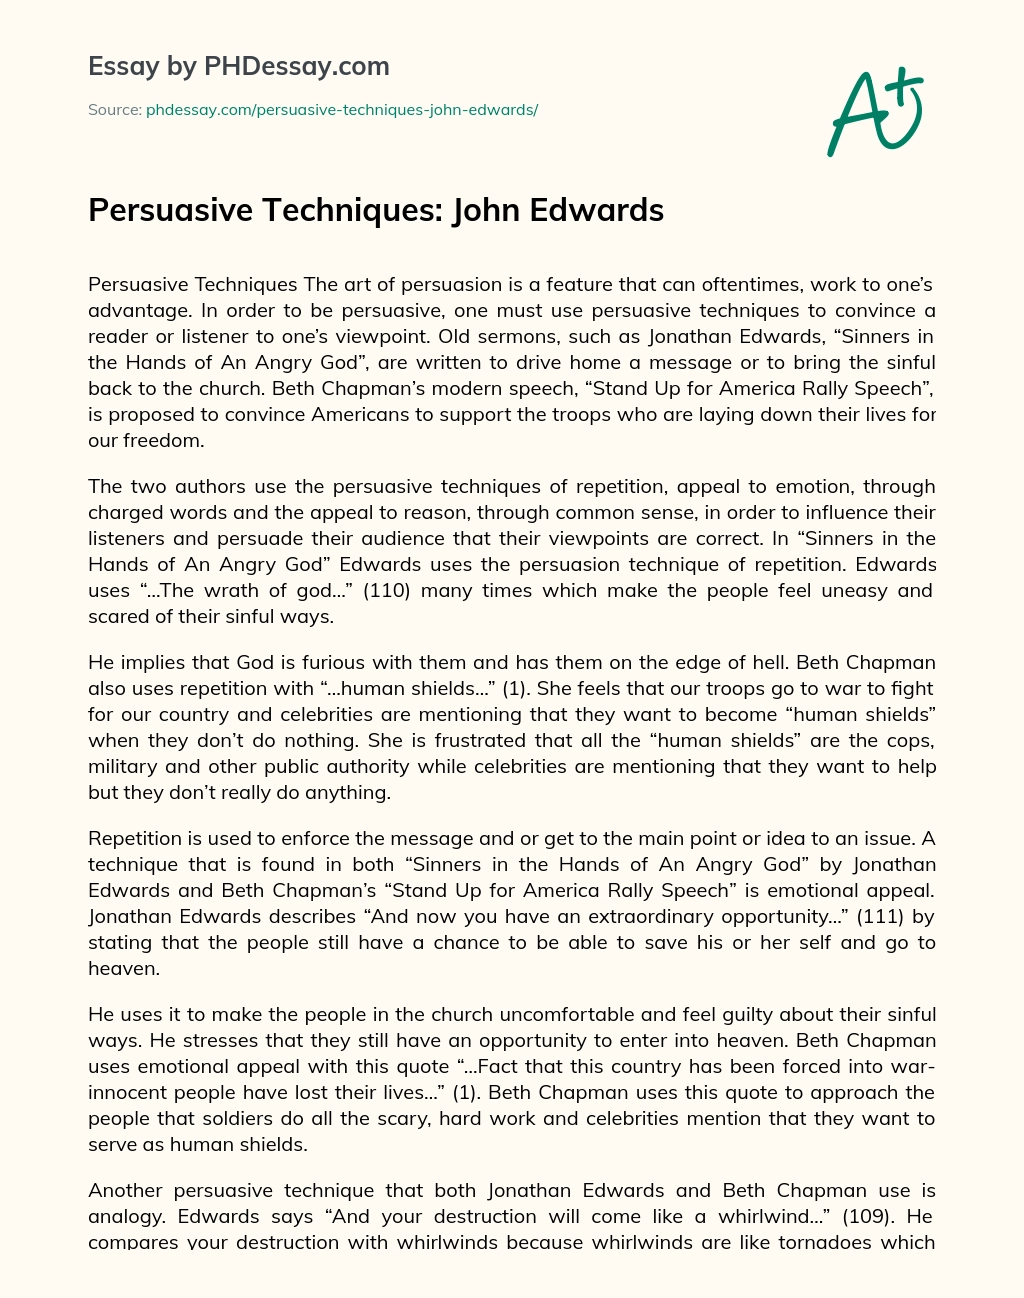 Persuasive Techniques: John Edwards essay